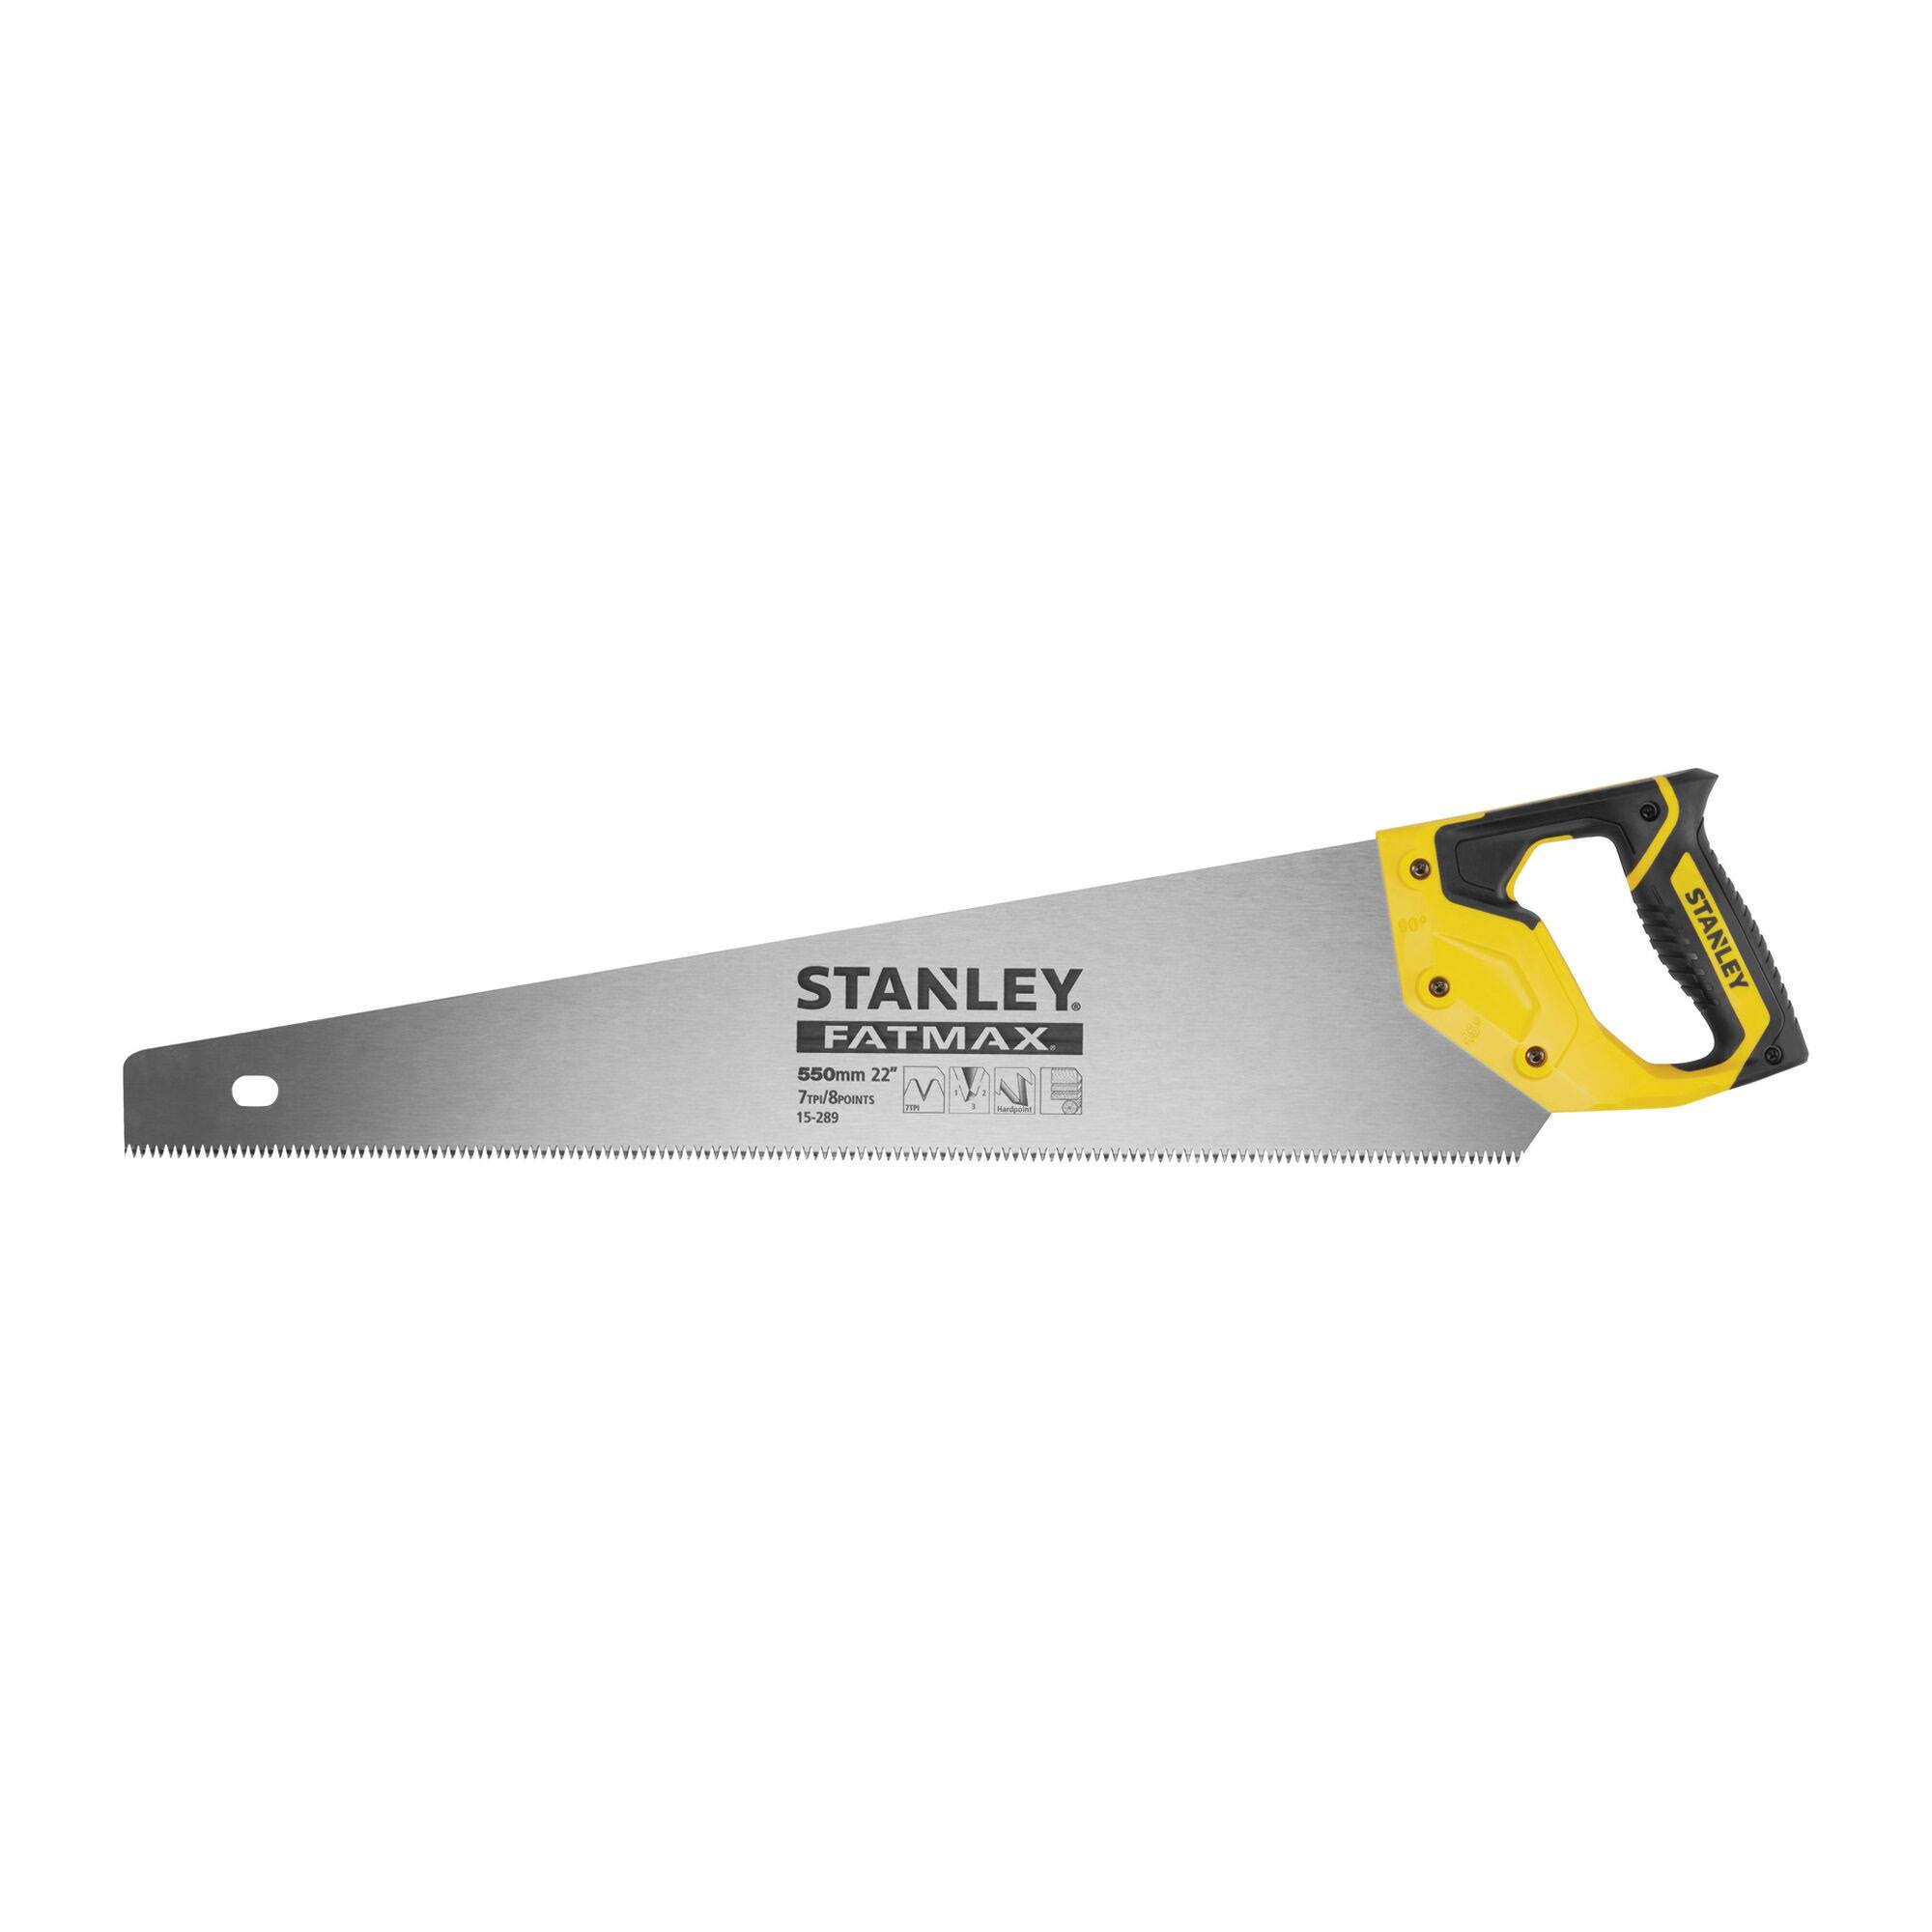 Stanley handsaw 550 mm 2-15-289